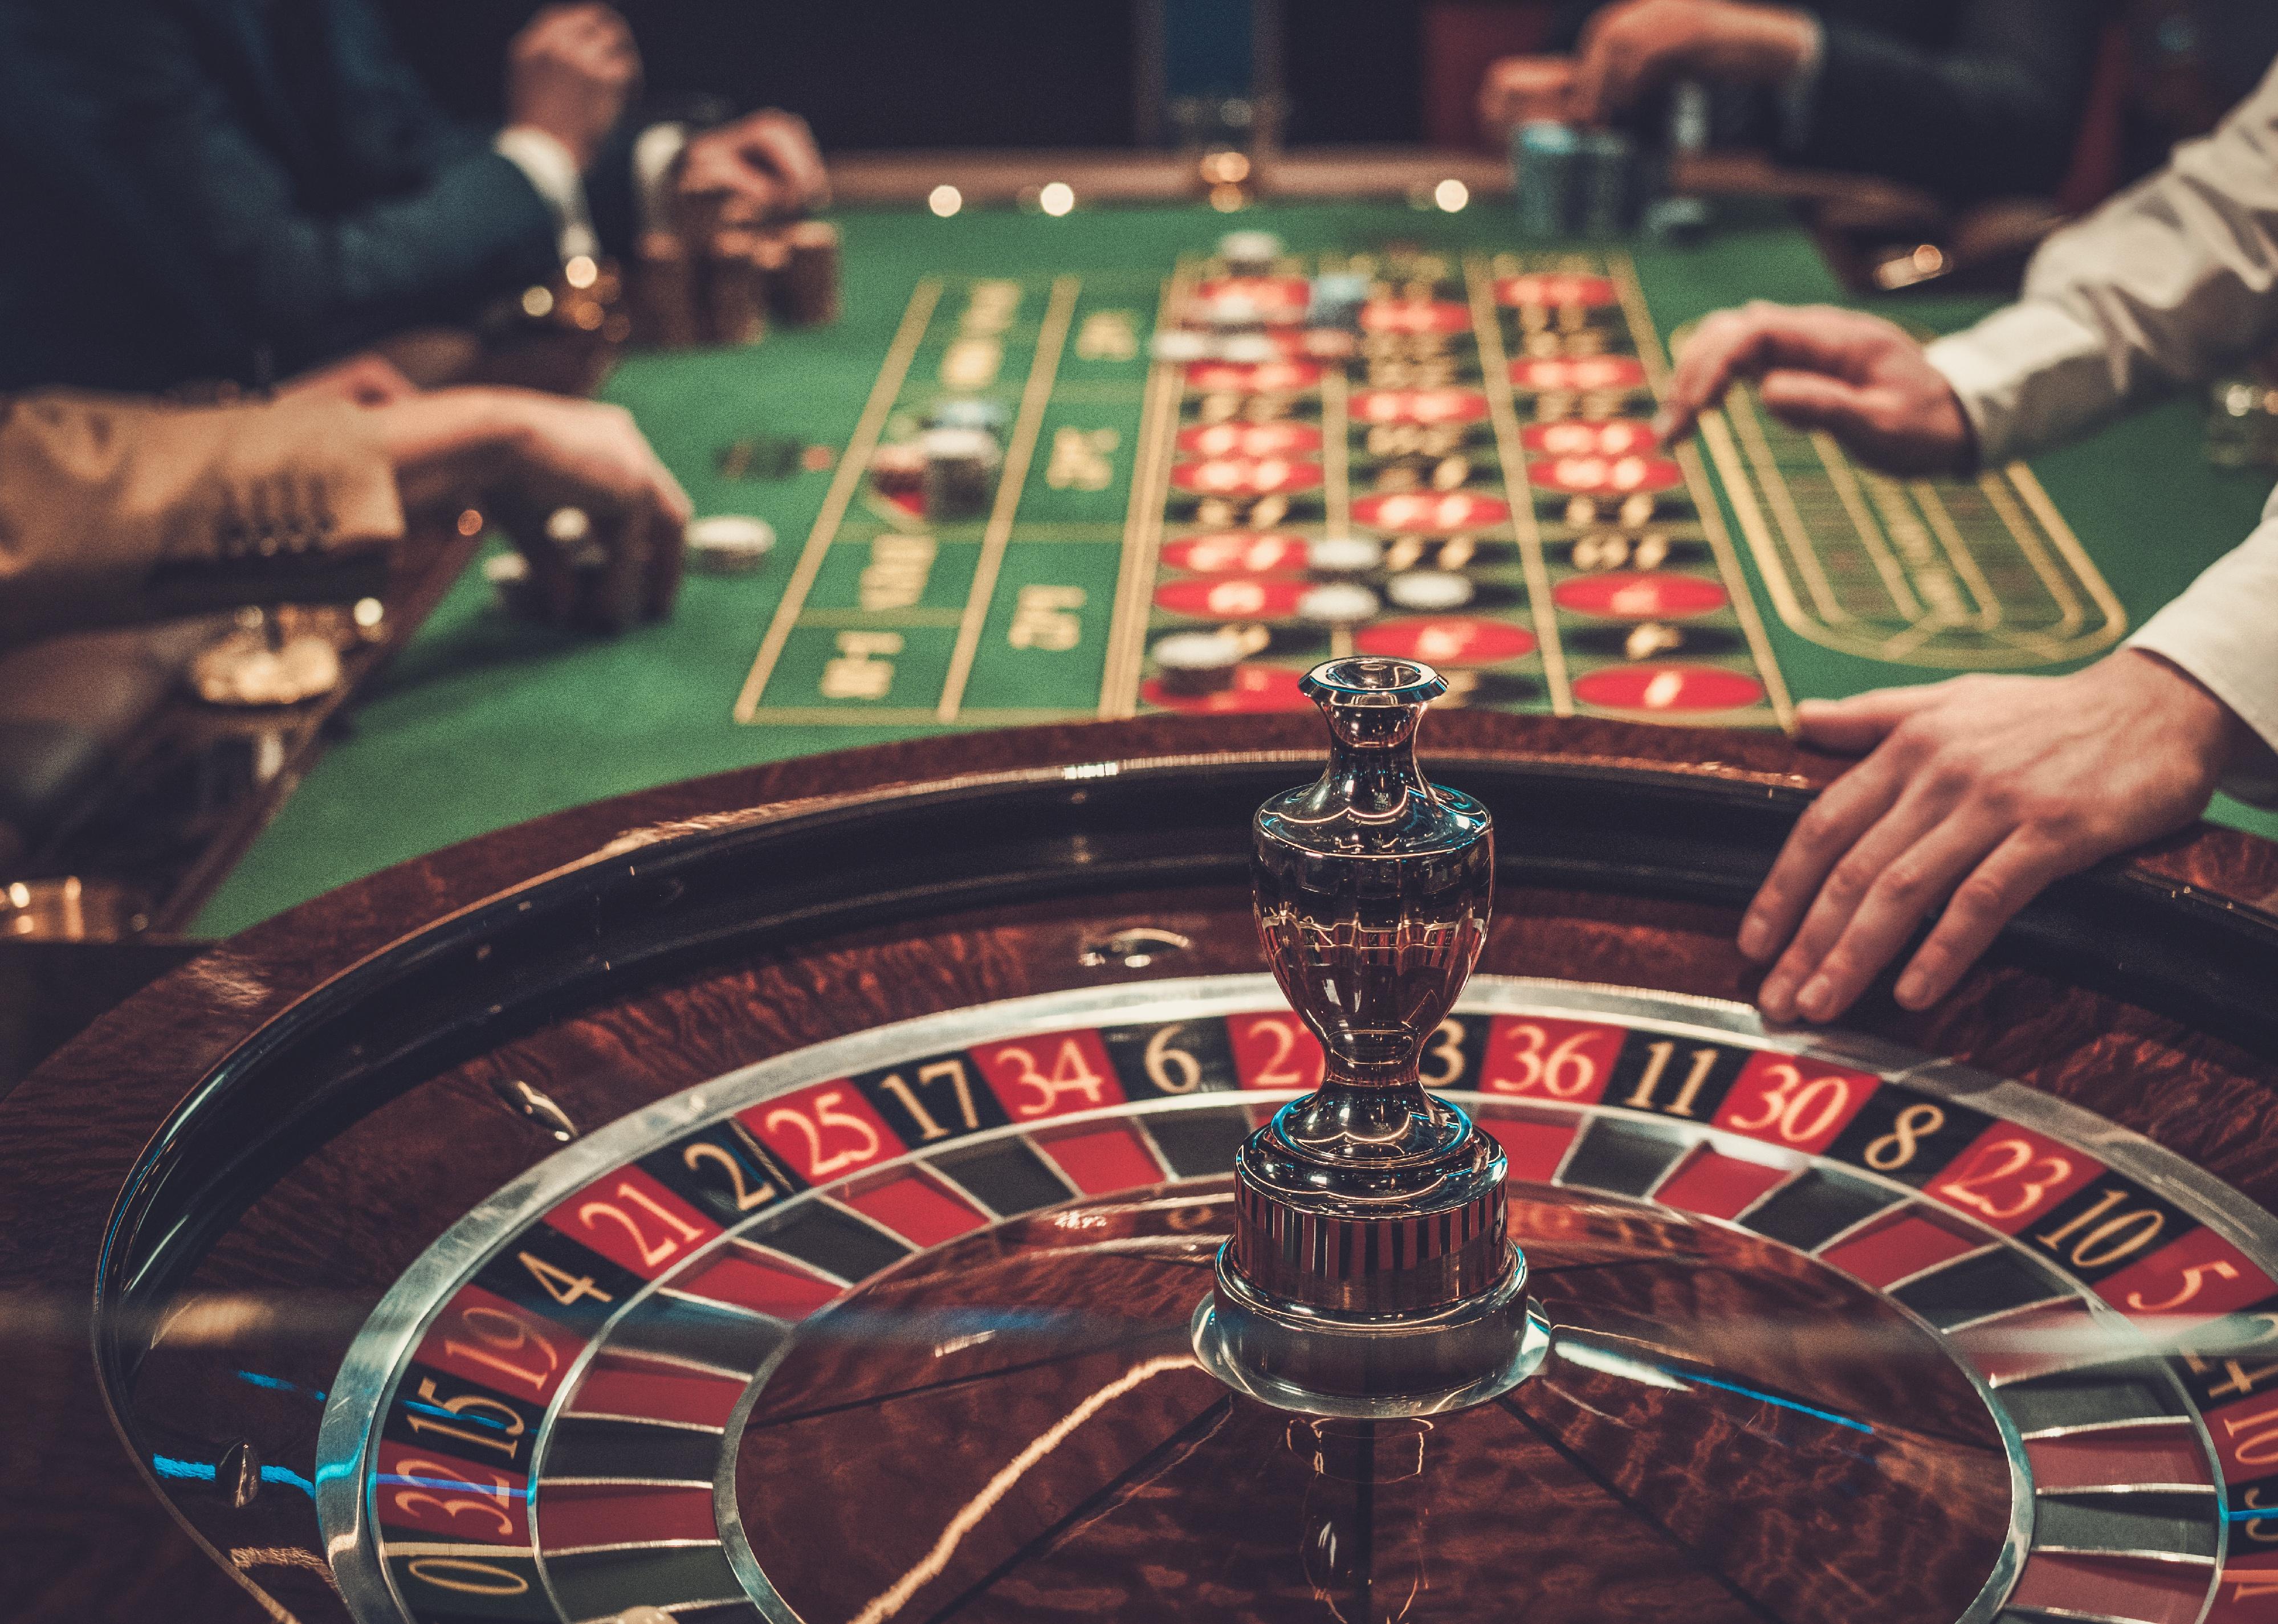 Gambling table in luxury casino.